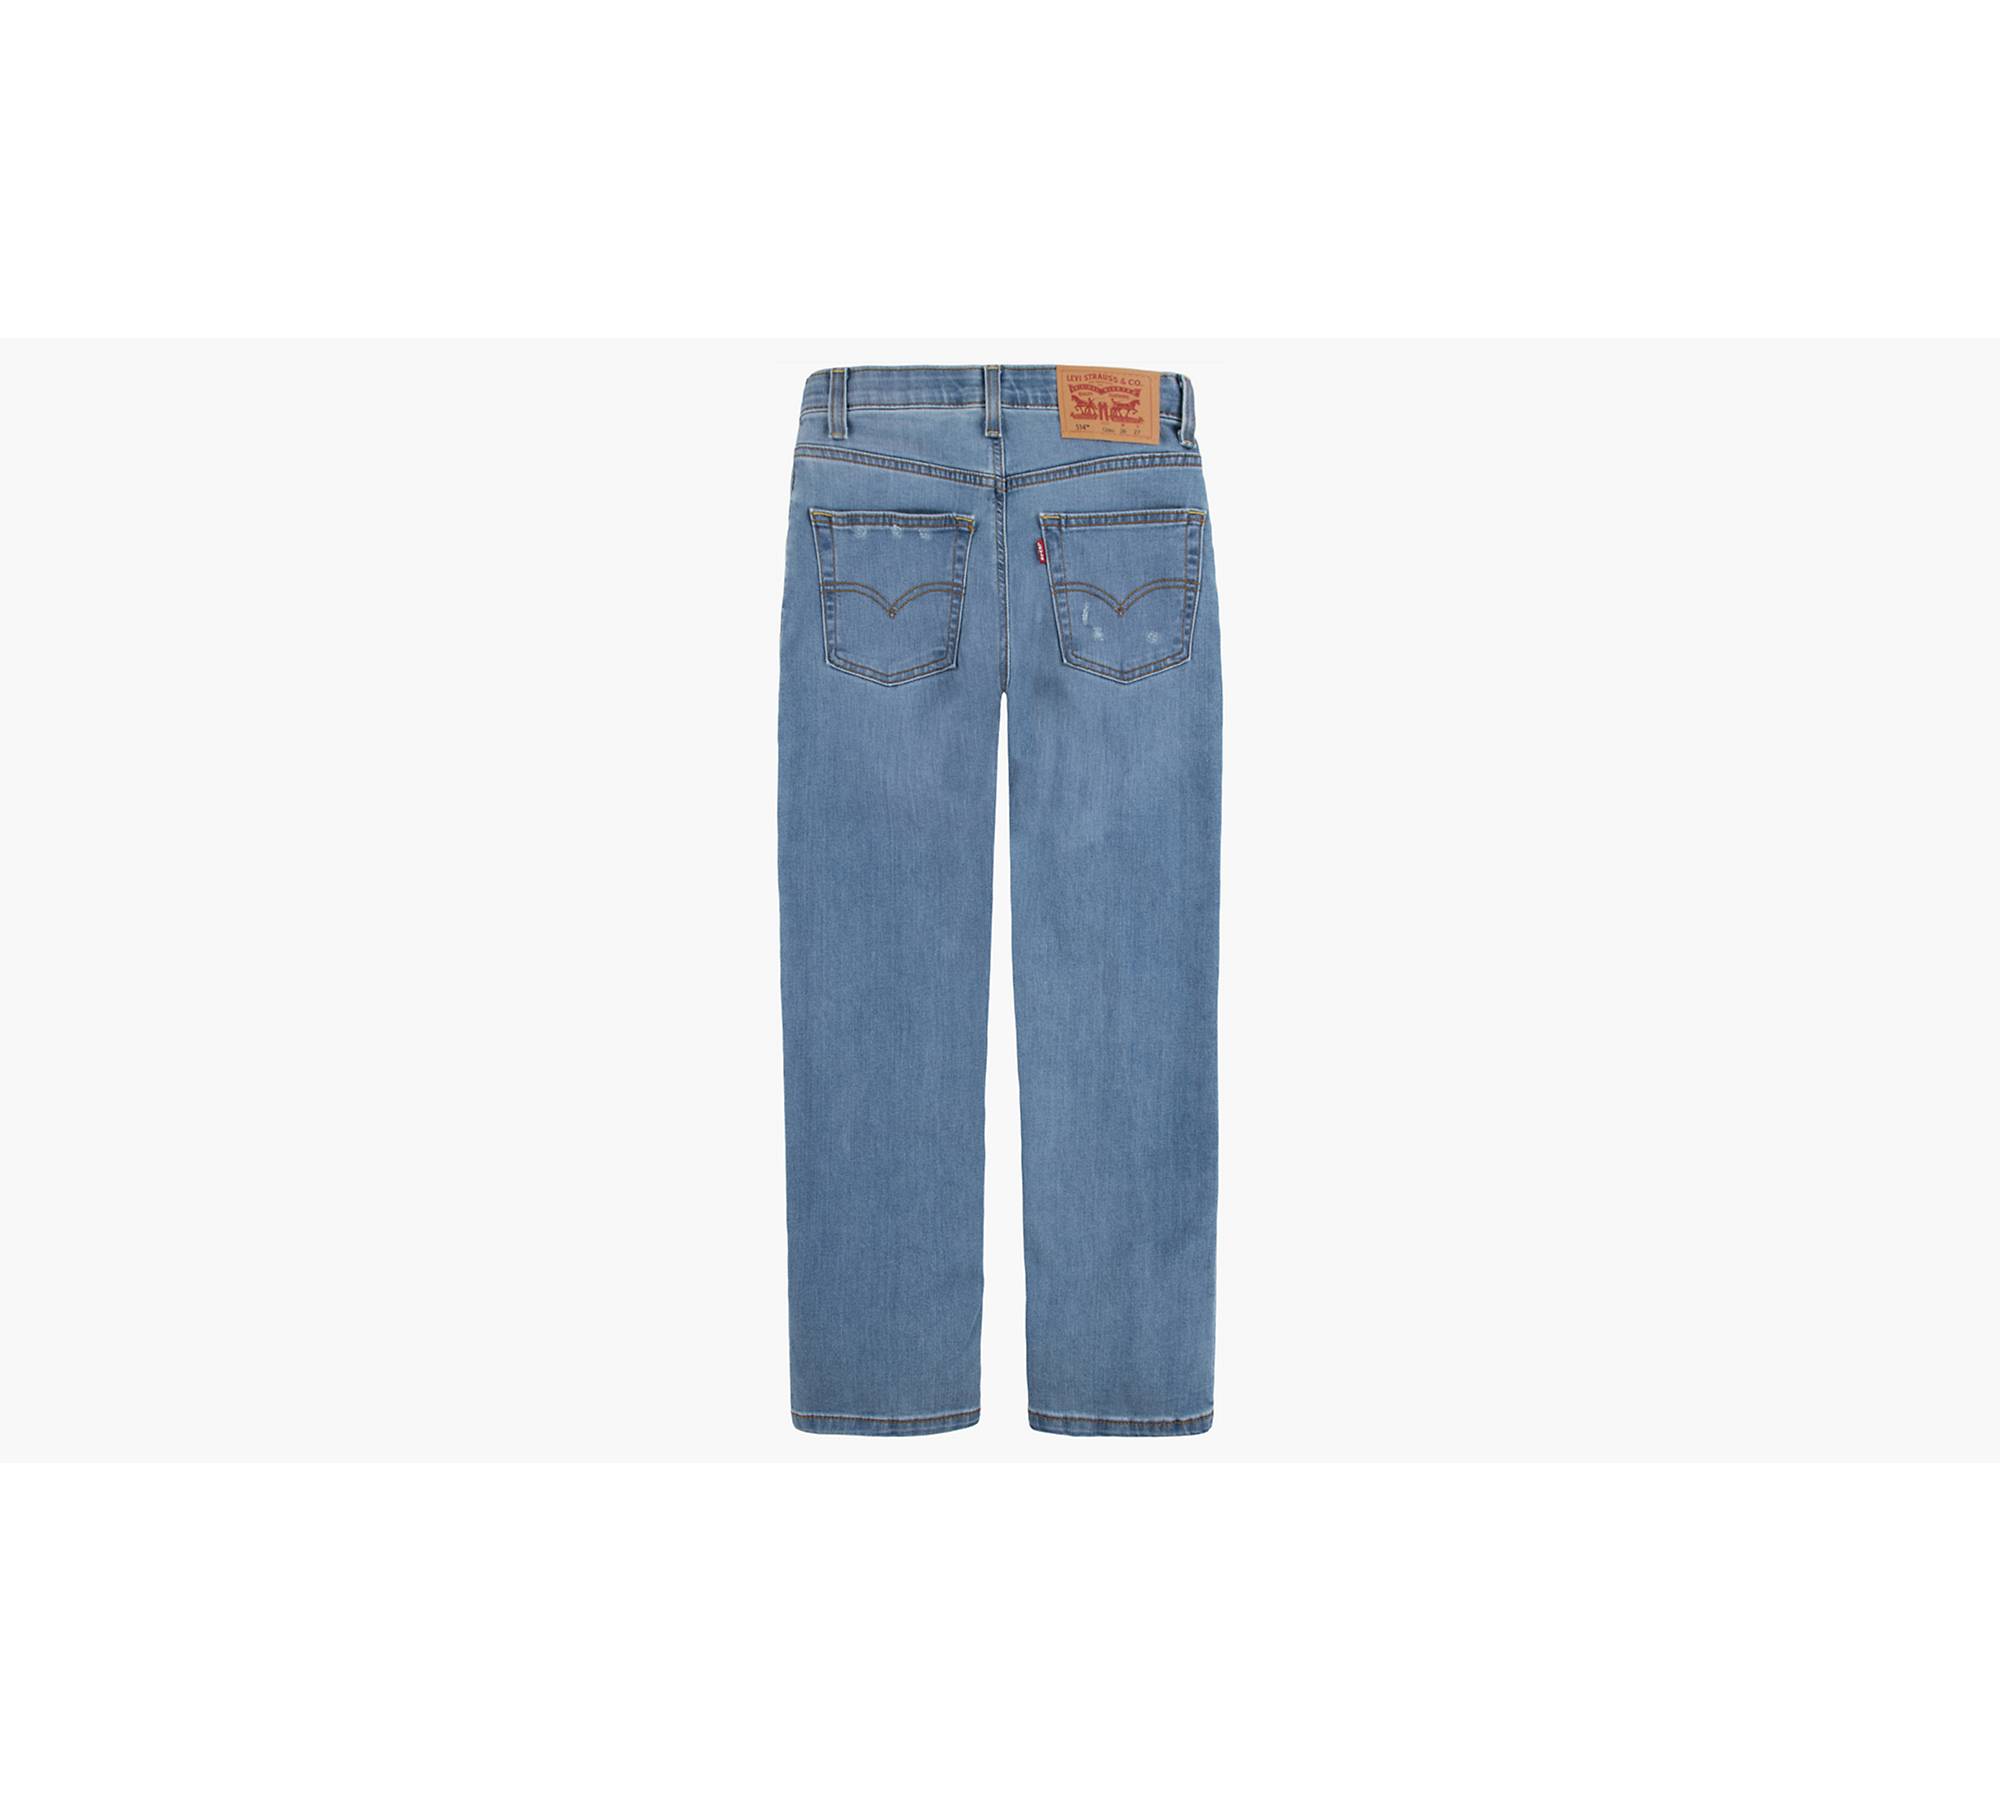 514™ Husky Straight Fit Performance Jeans Big Boys 8-20 - Medium Wash